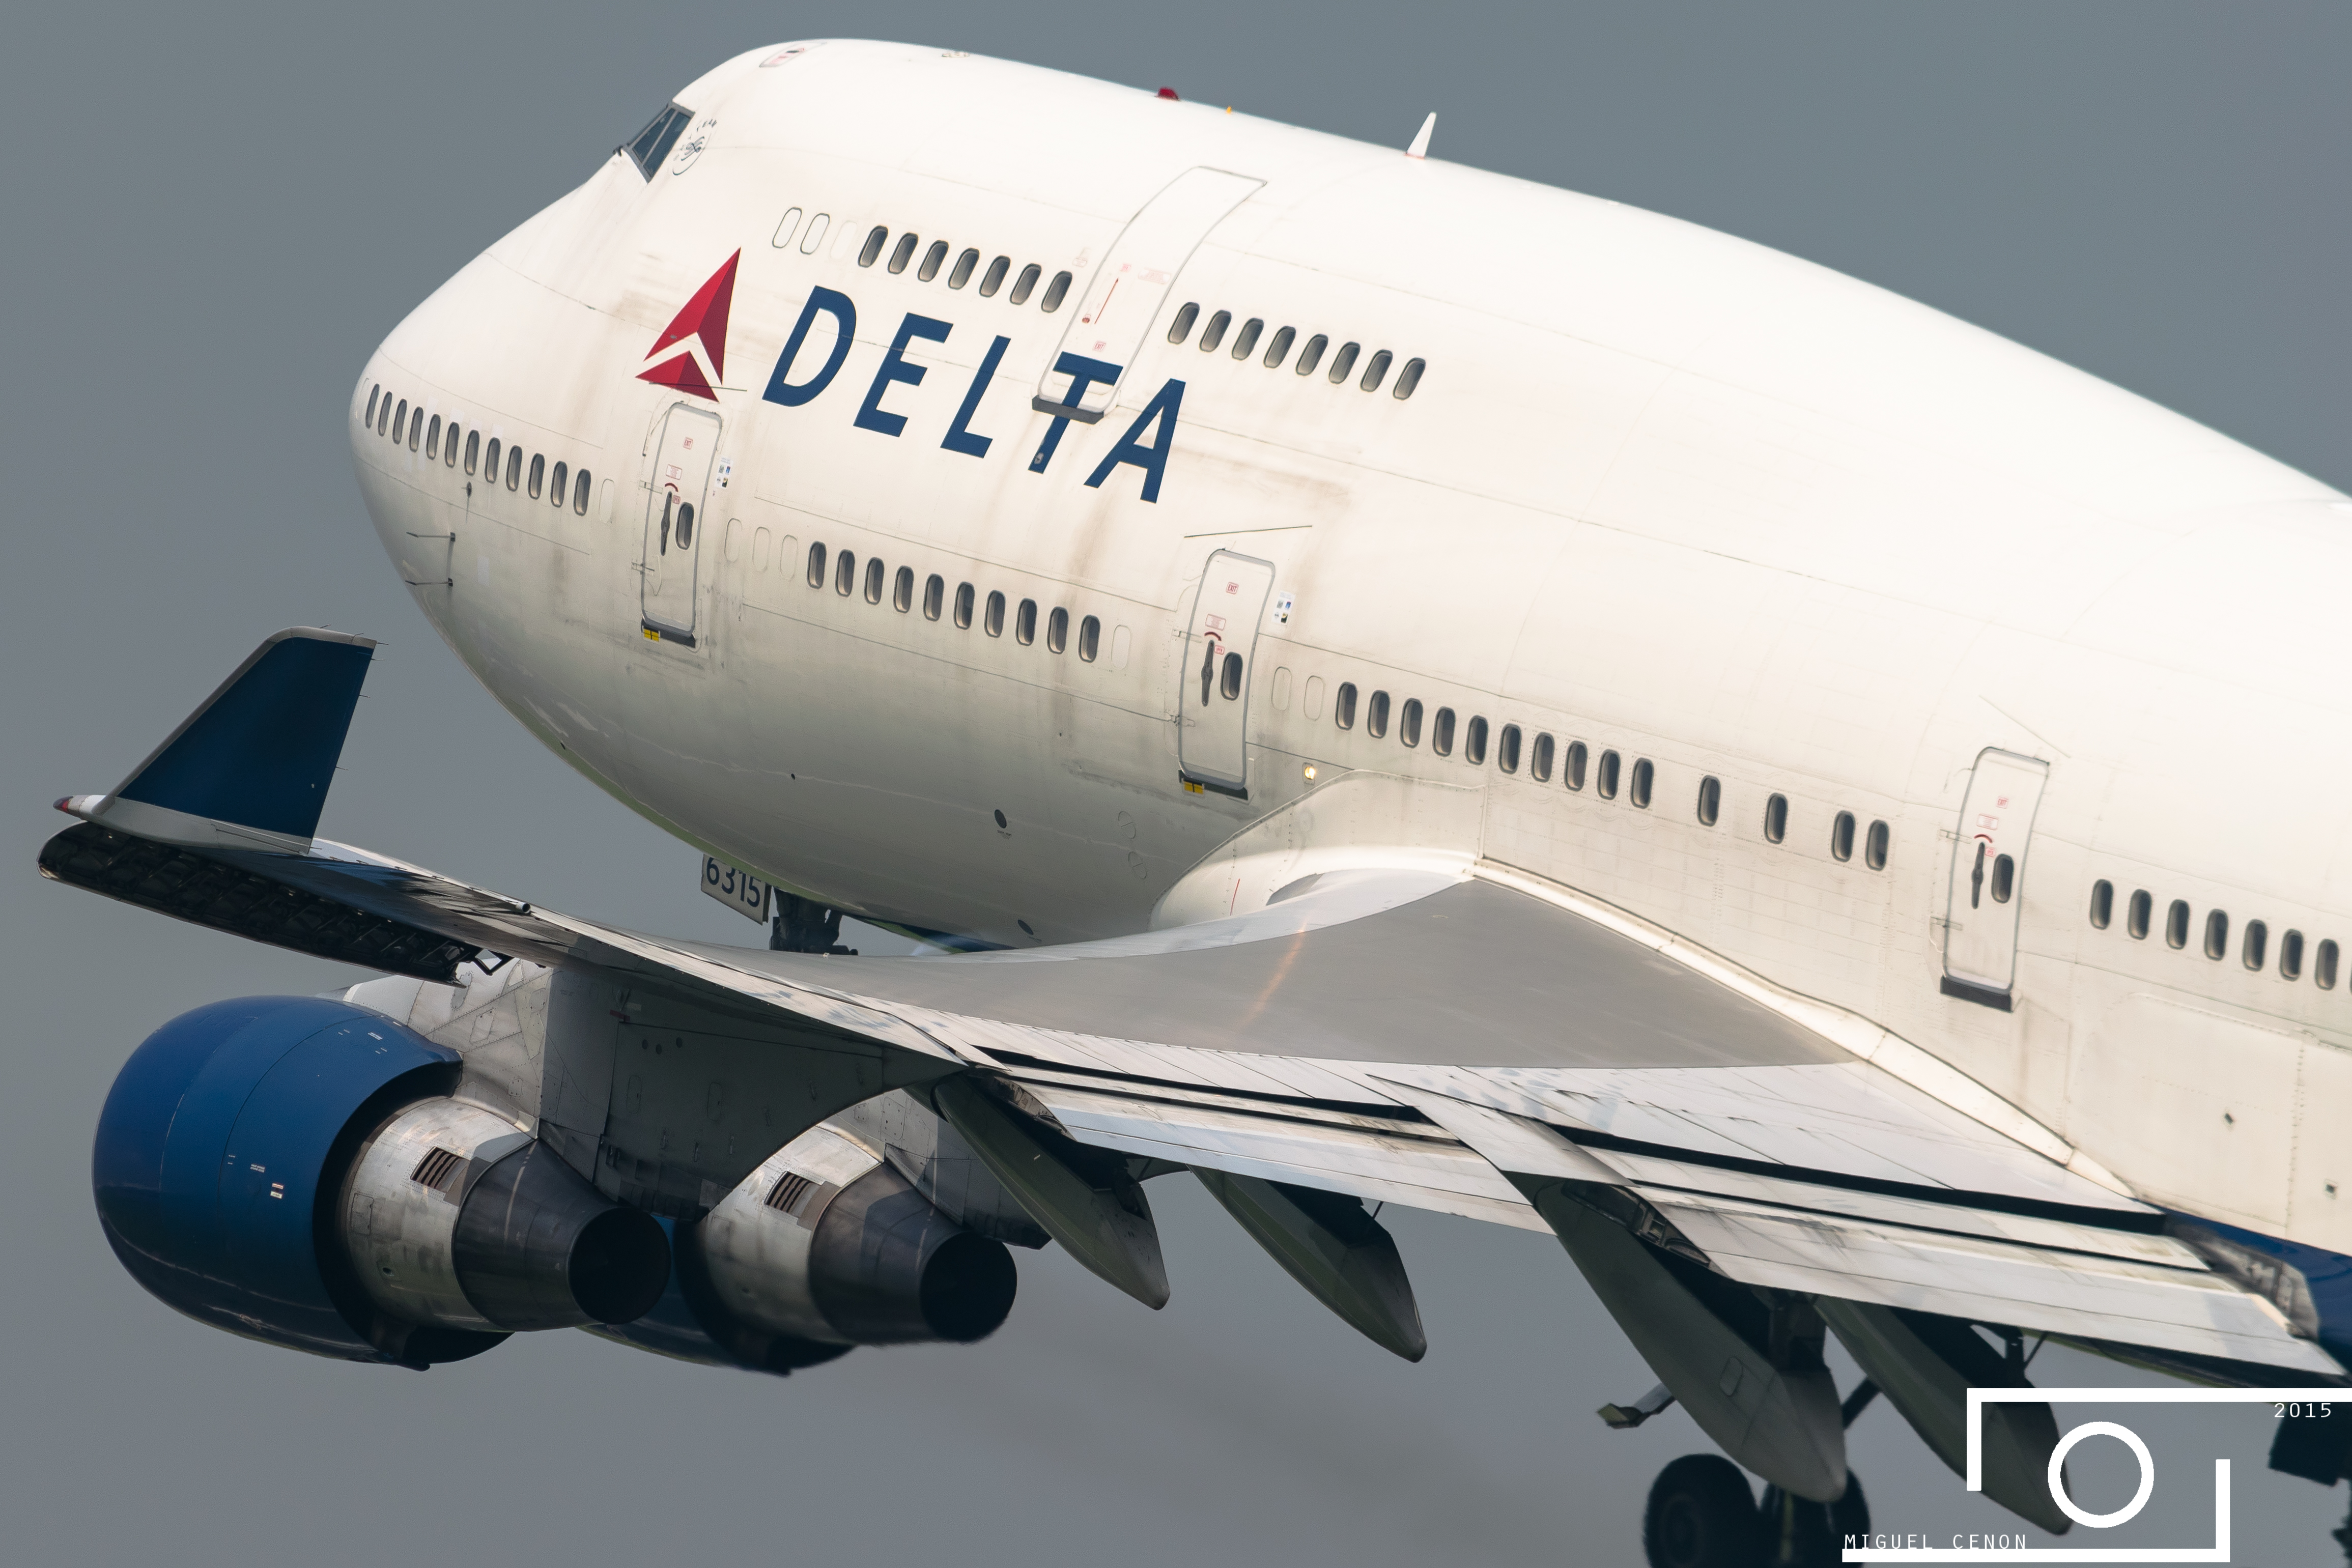 Public relations case study: Delta Air Lines' diversity training